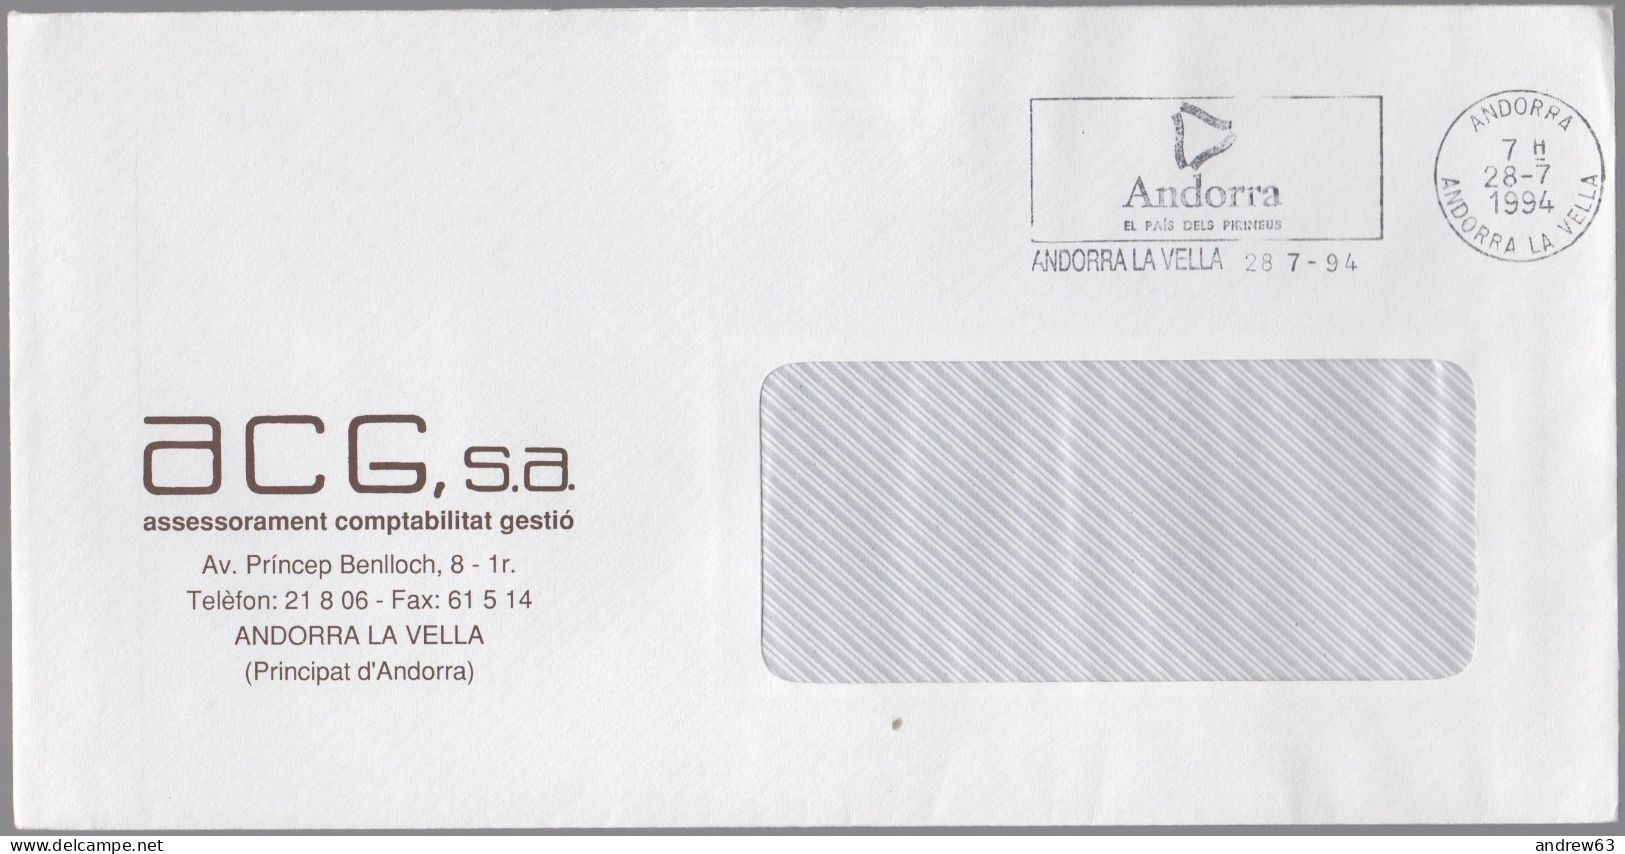 ANDORRA - ANDORRE - 1994 - Lettre En Franchise + Flamme - ACG, S.a. - Viaggiata Da Andorra La Vella - Storia Postale